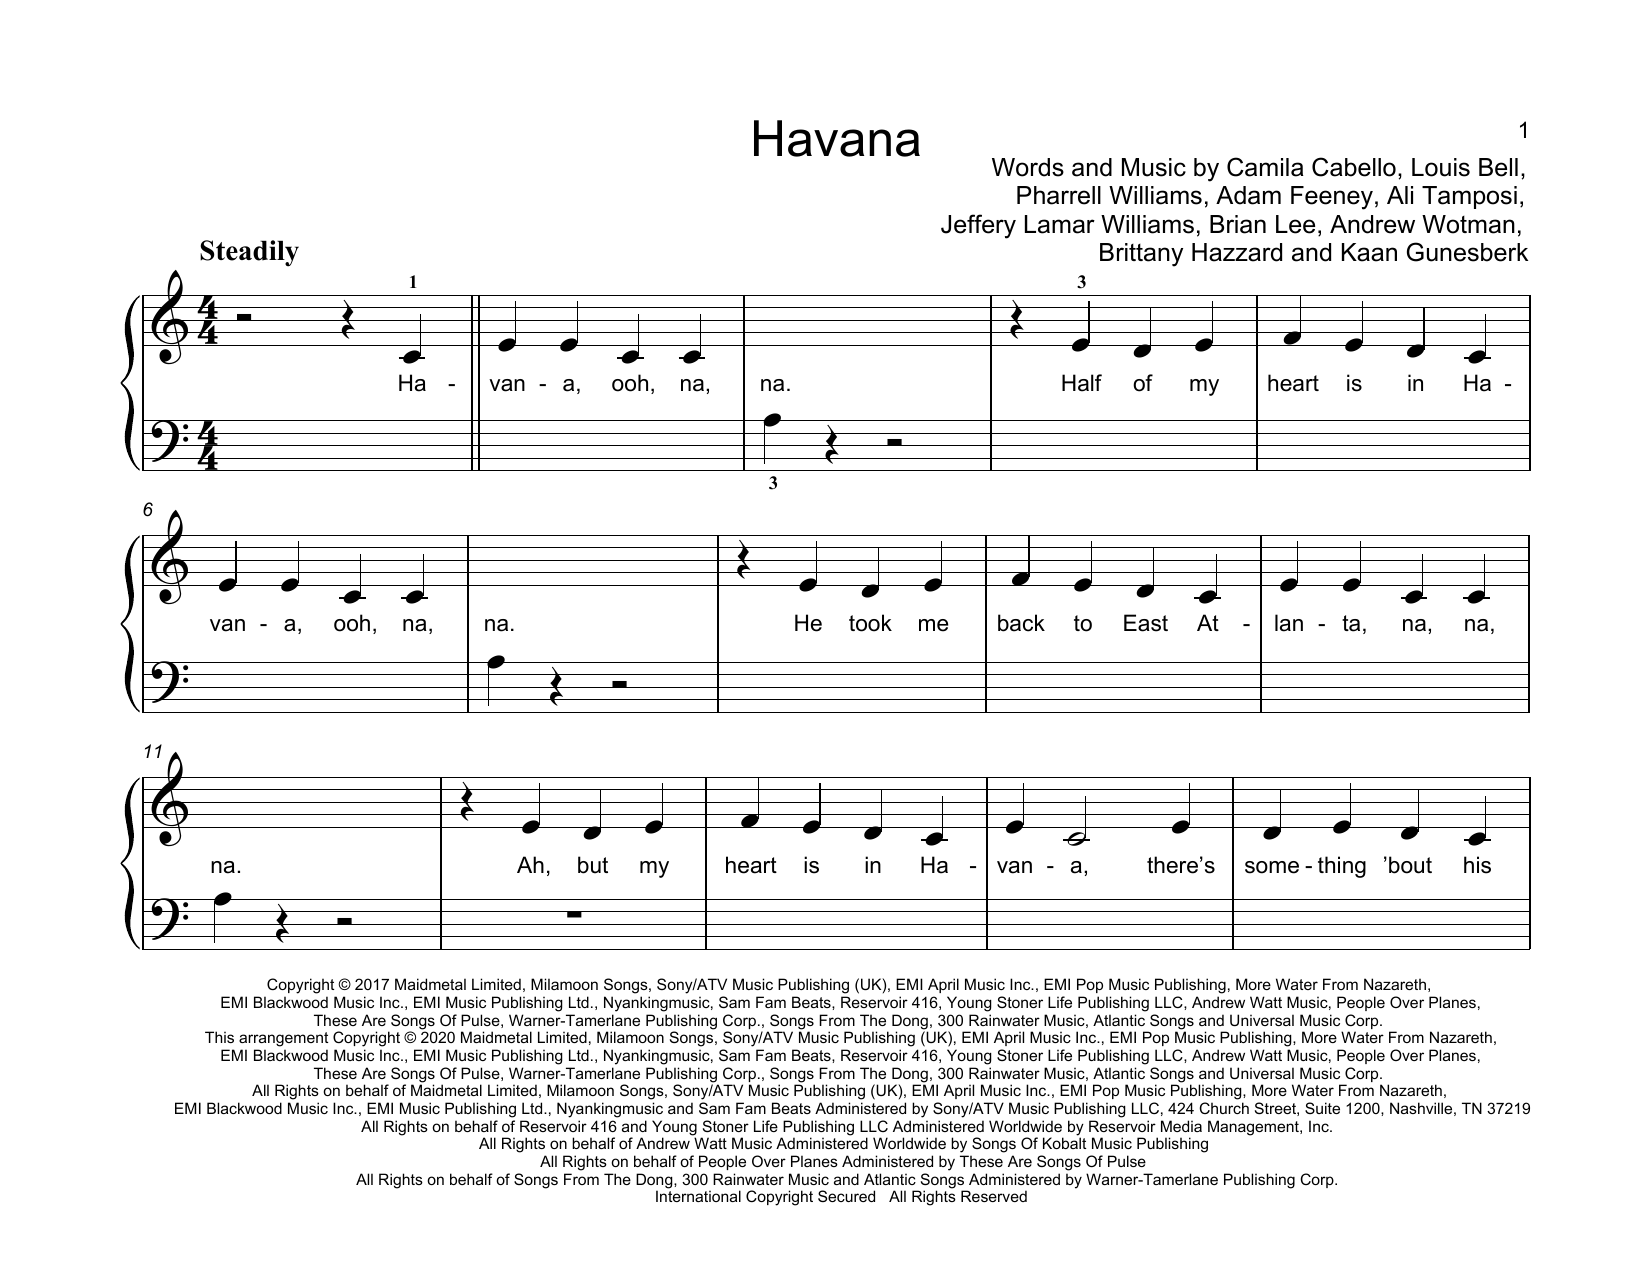 Camila Cabello "Havana (feat. Young Thug)" Sheet Music Download PDF Score 431575